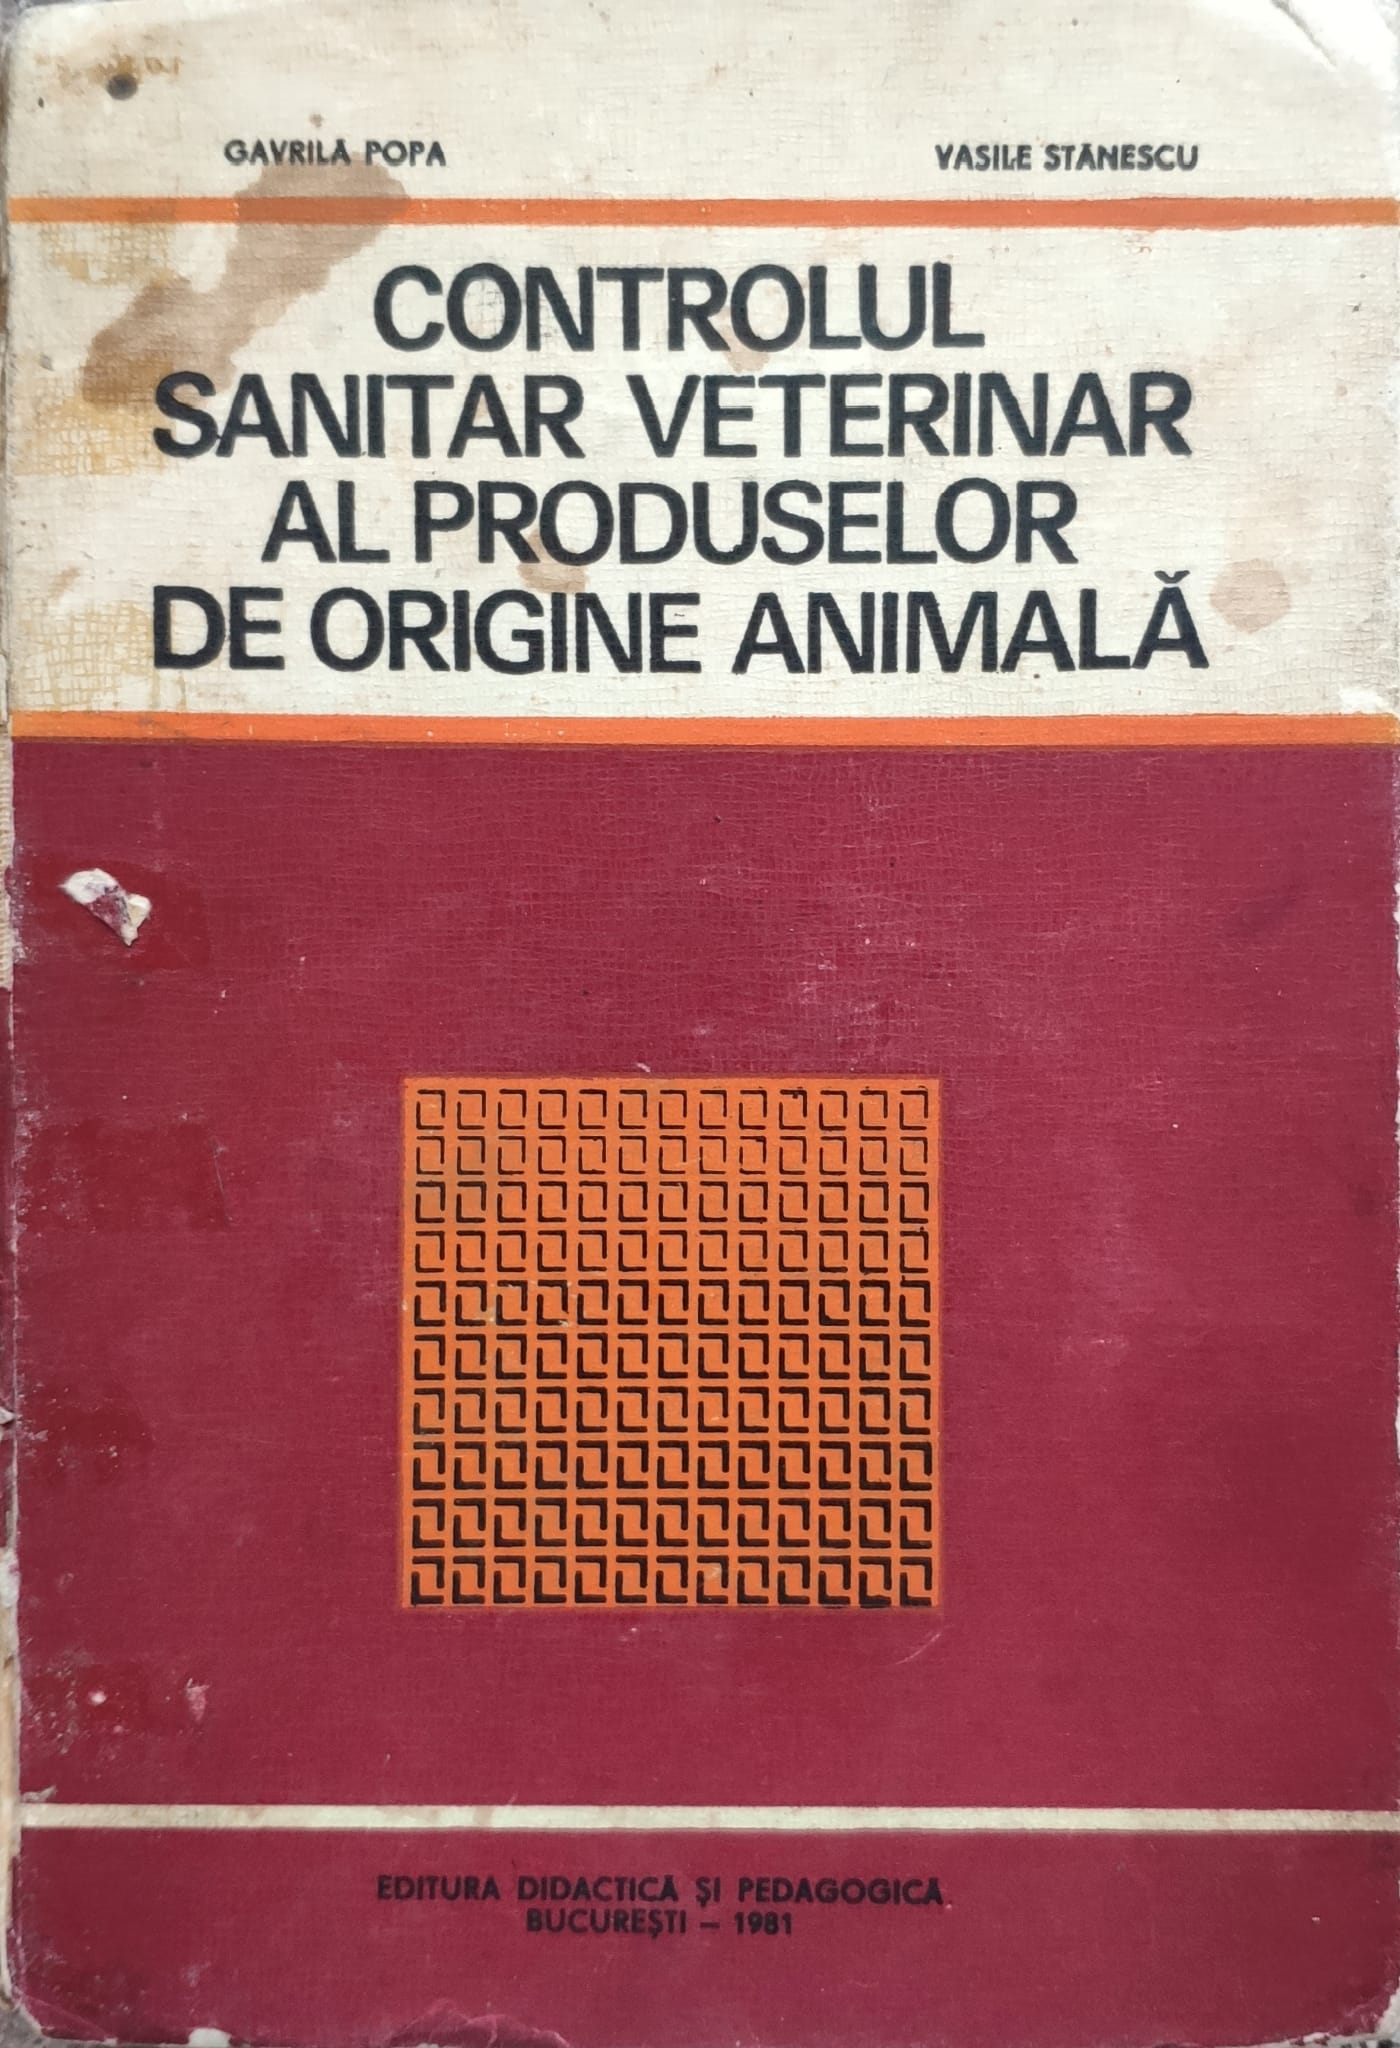 controlul sanitar veterinar al produselor de origine animala                                         gavrila popa vasile stanescu                                                                        